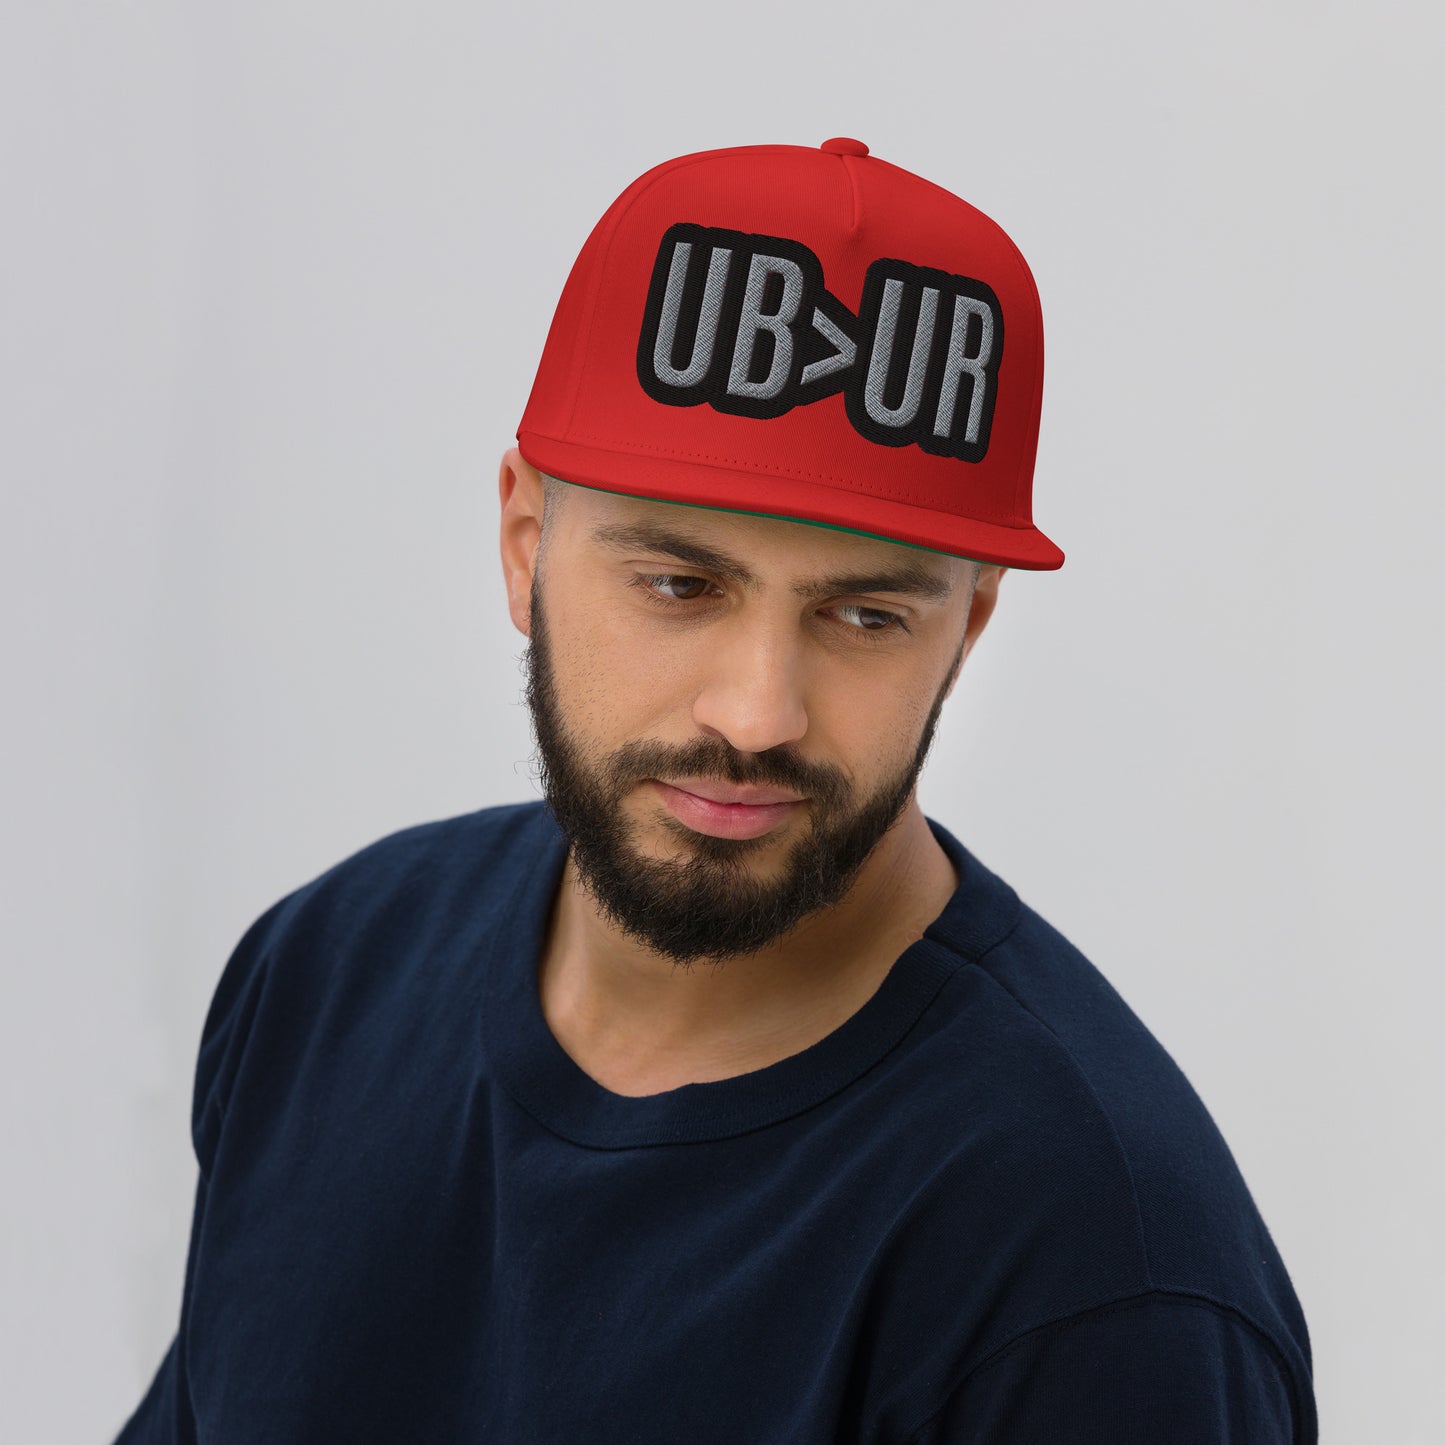 UB>UR-Flat Bill Cap with black n gray lettering